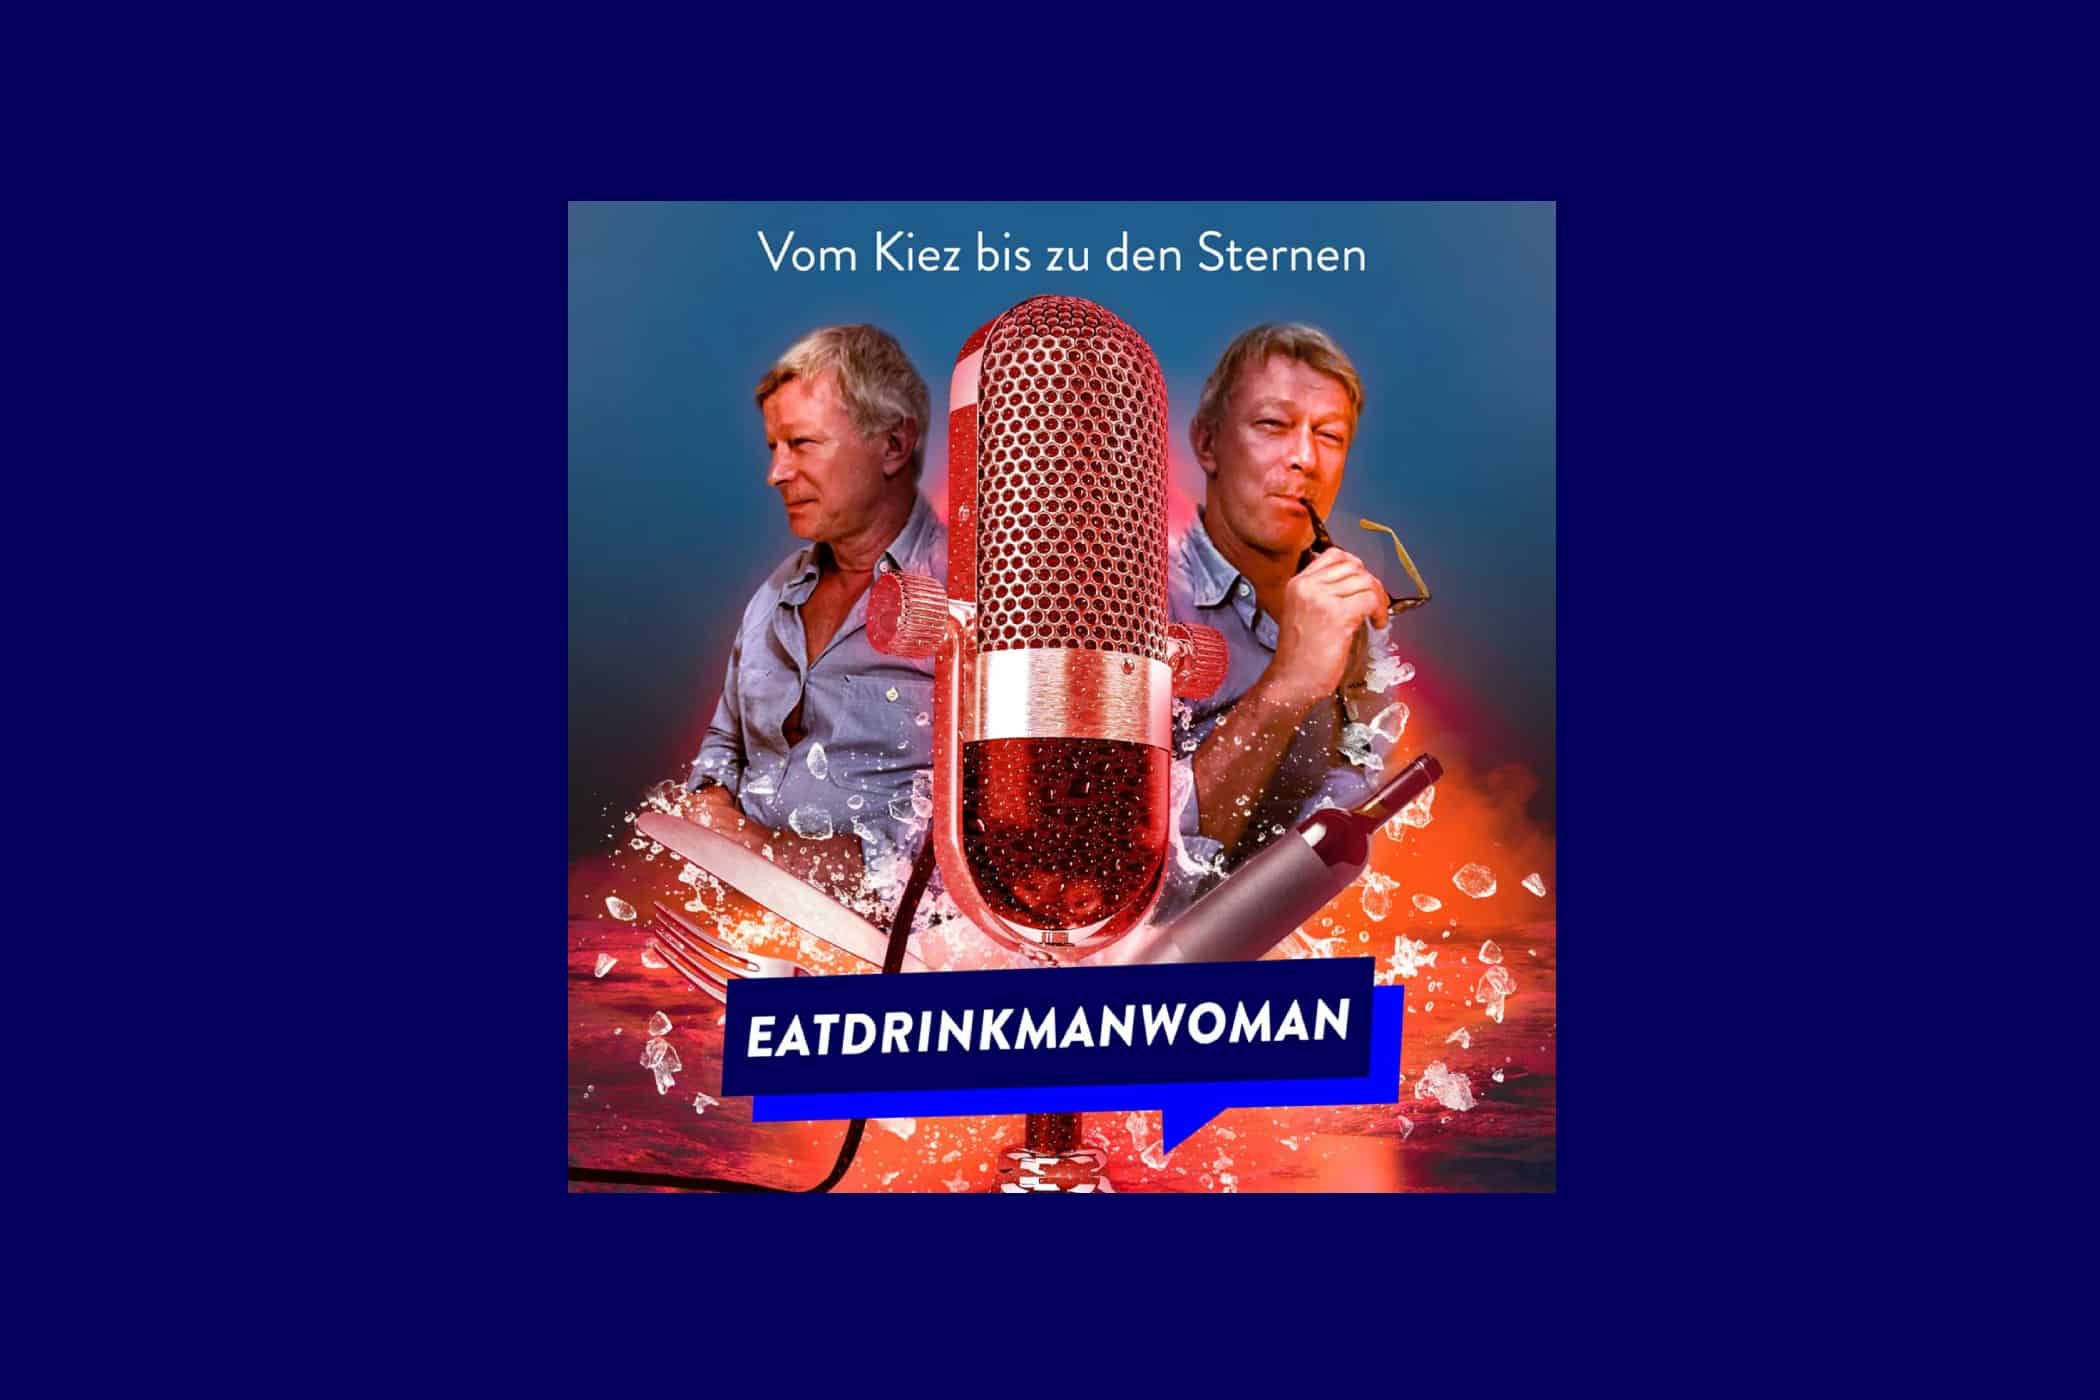 eat drink man woman - trends, medien-tools, gastronomie nomyblog zu Gast im EatDrinkManWoman-Podcast